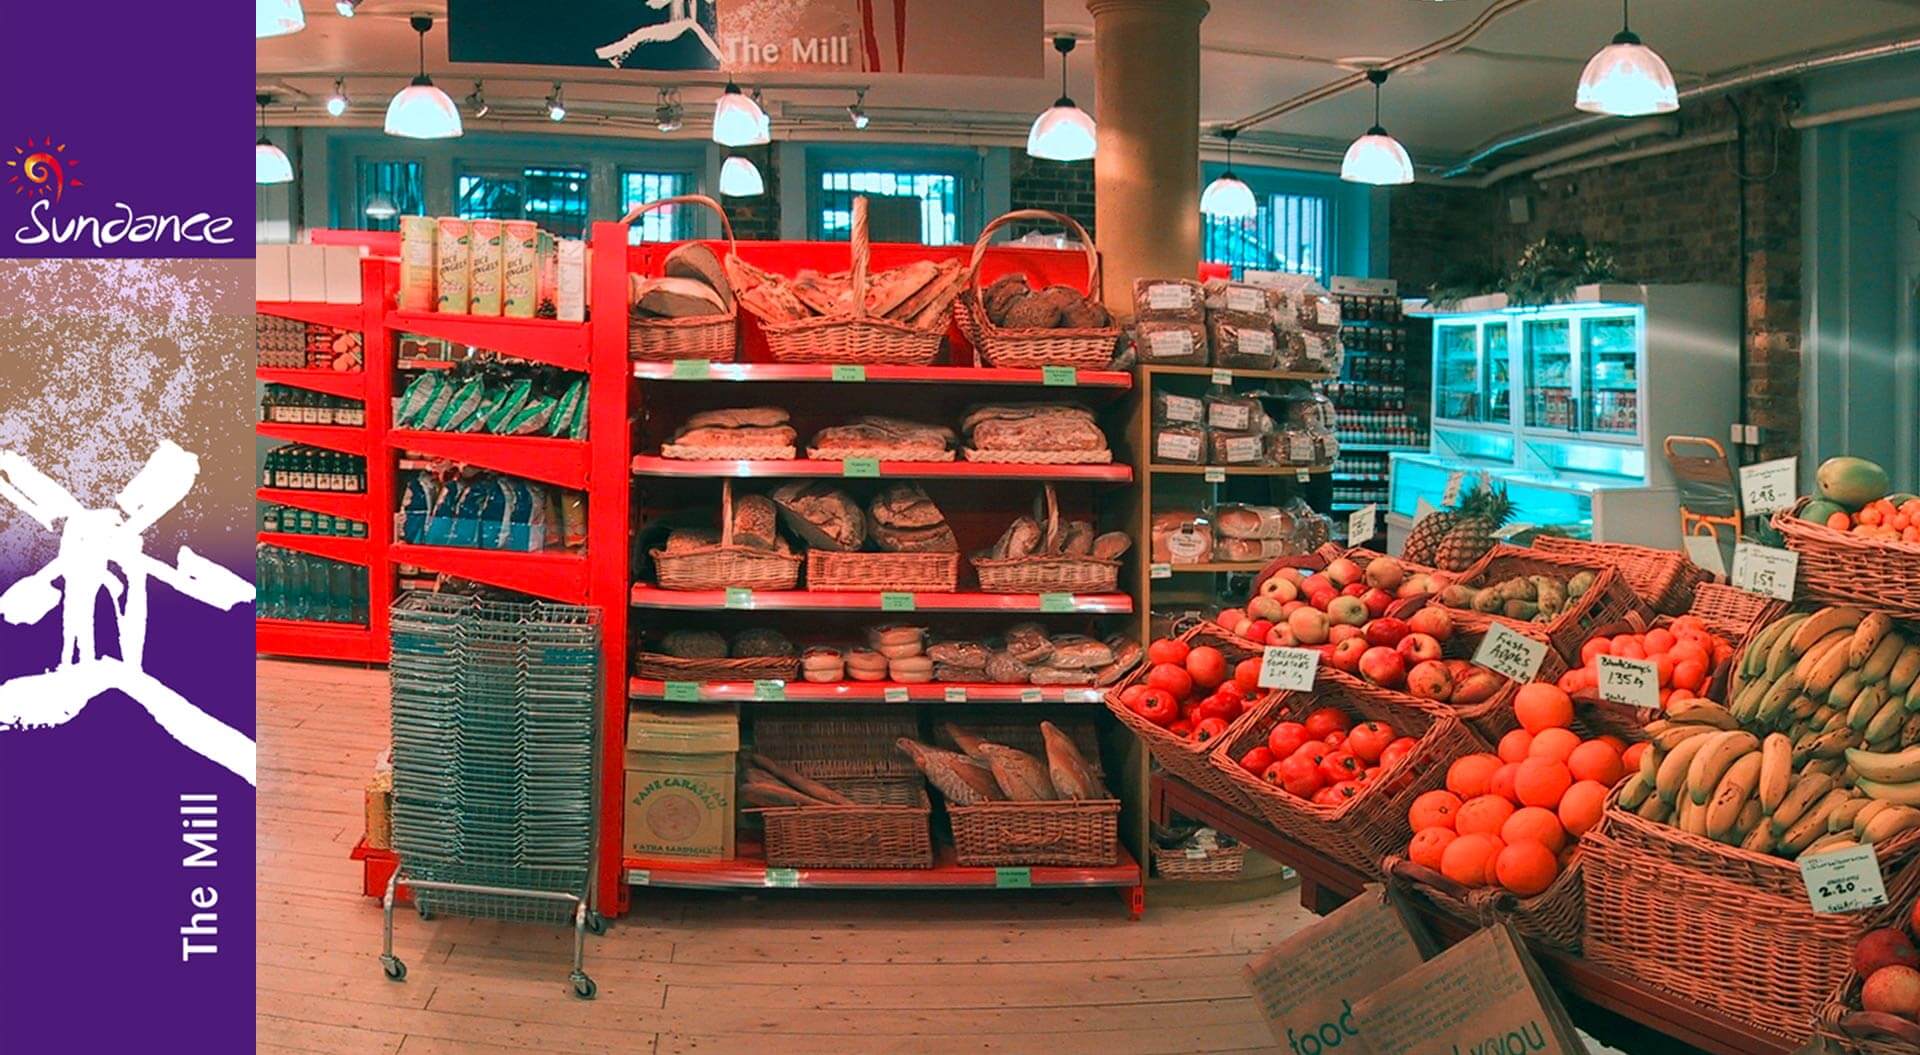 Sundace Organic supermarket fresh produce and bakery department with branding